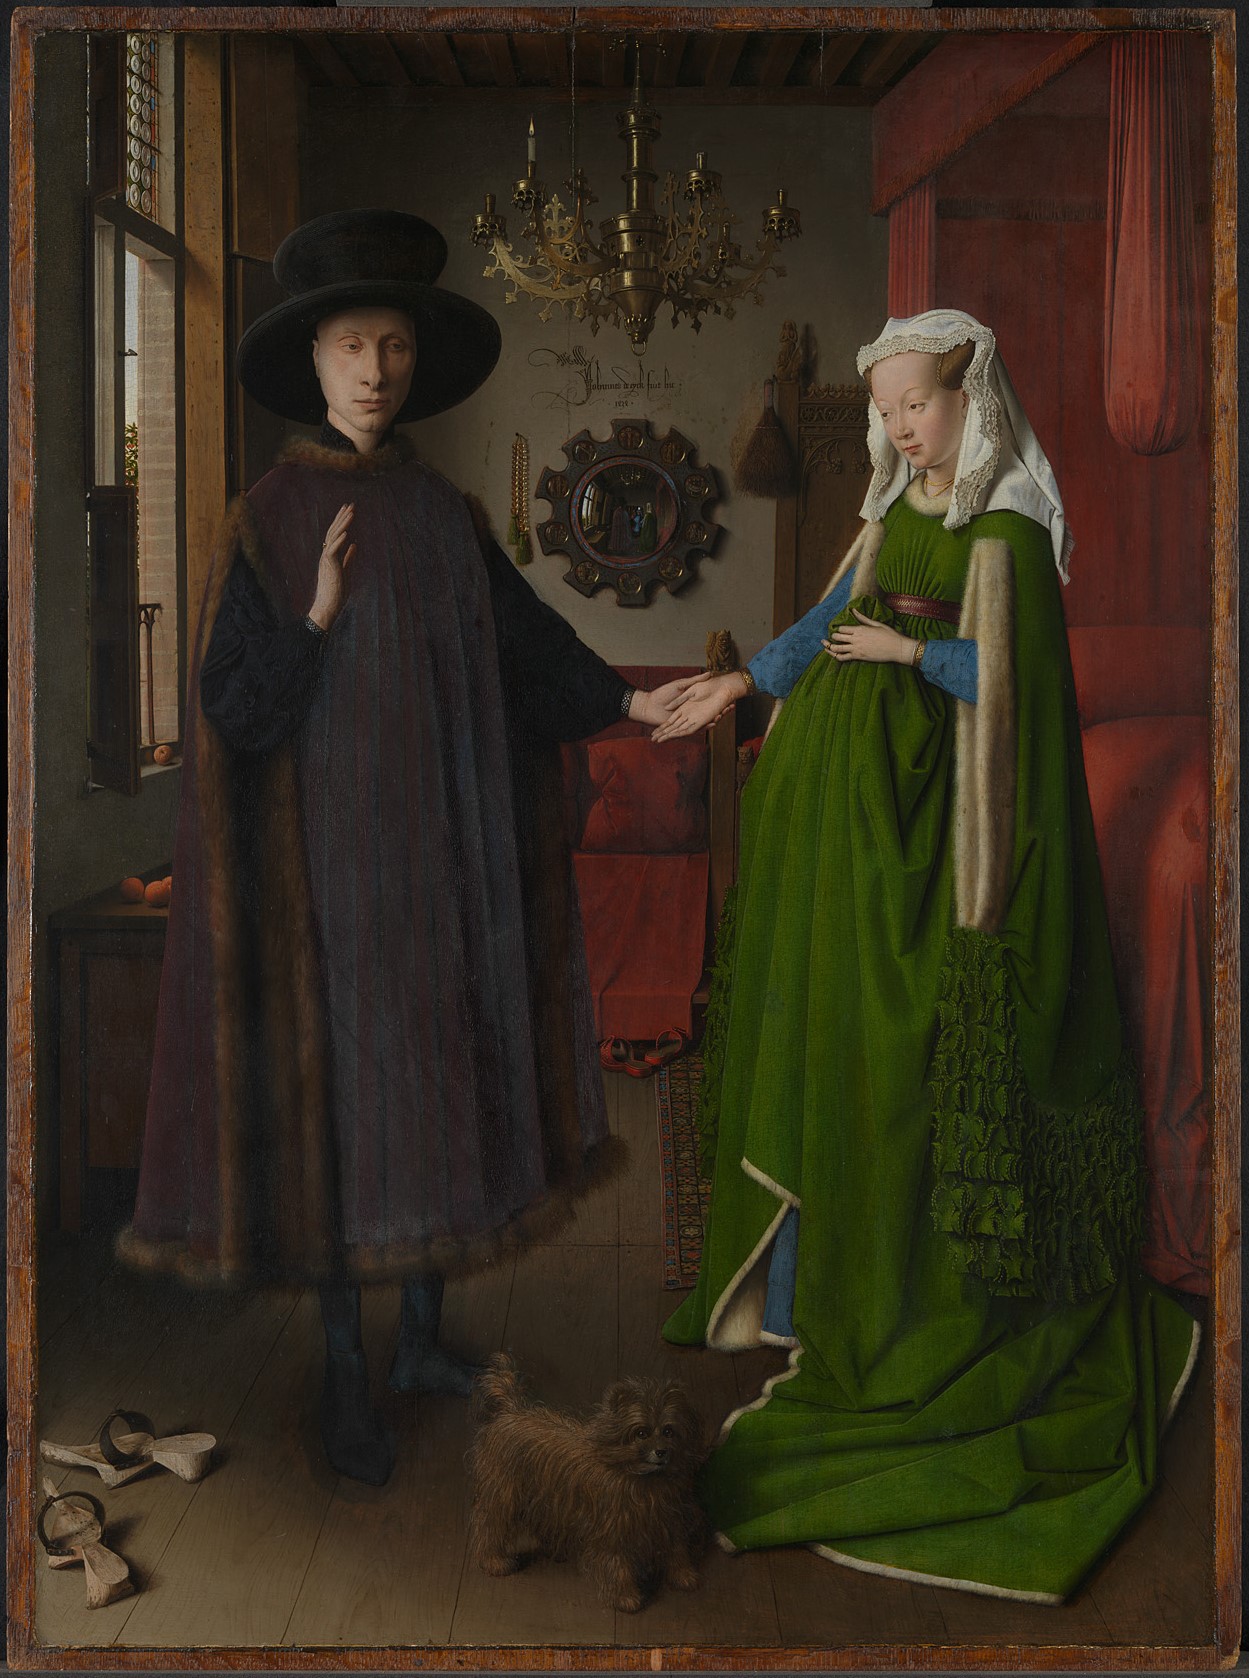 Jan van Eyck's The Arnolfini Portrait